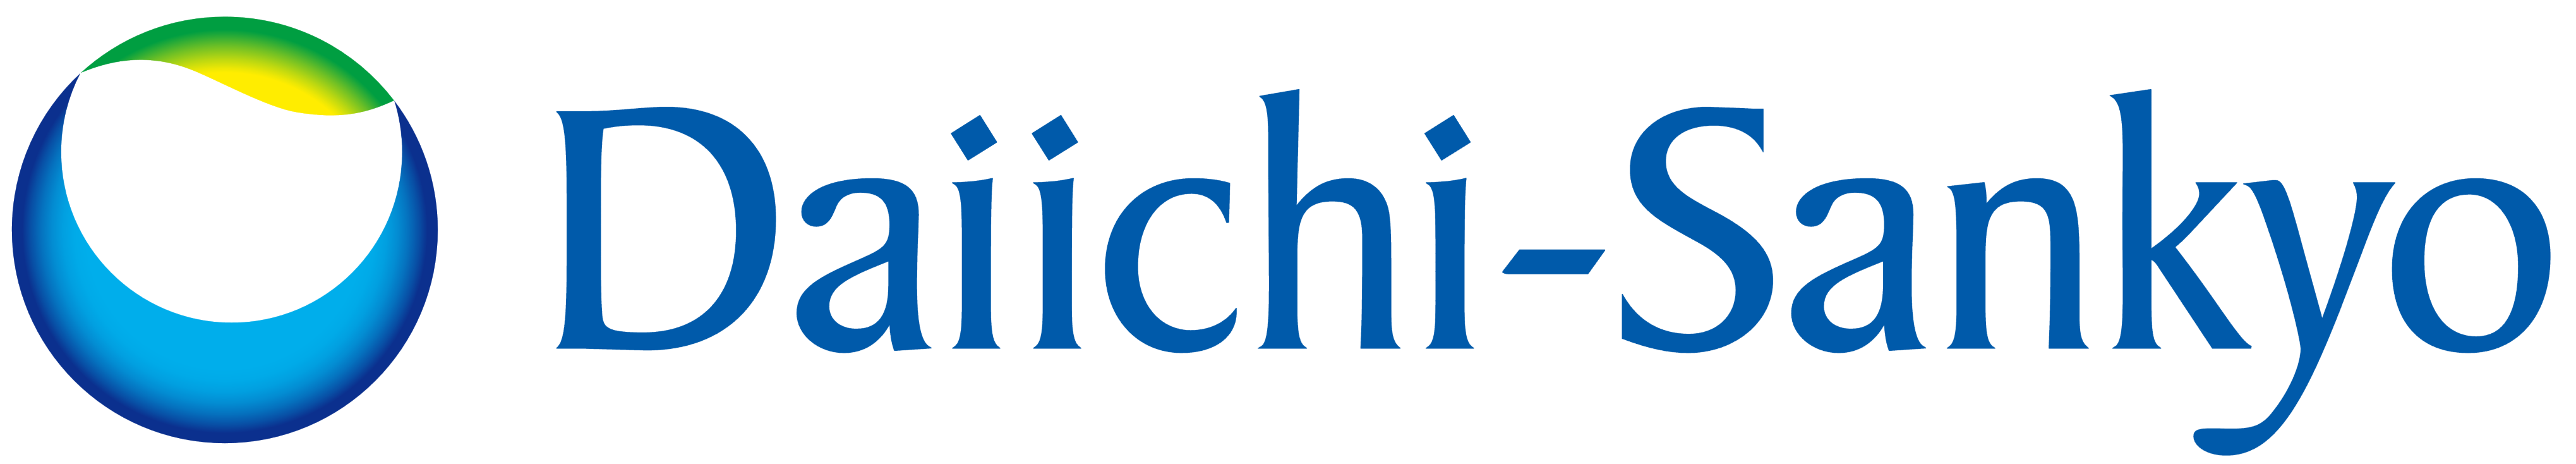 Daiichi Sankyo – Logos Download